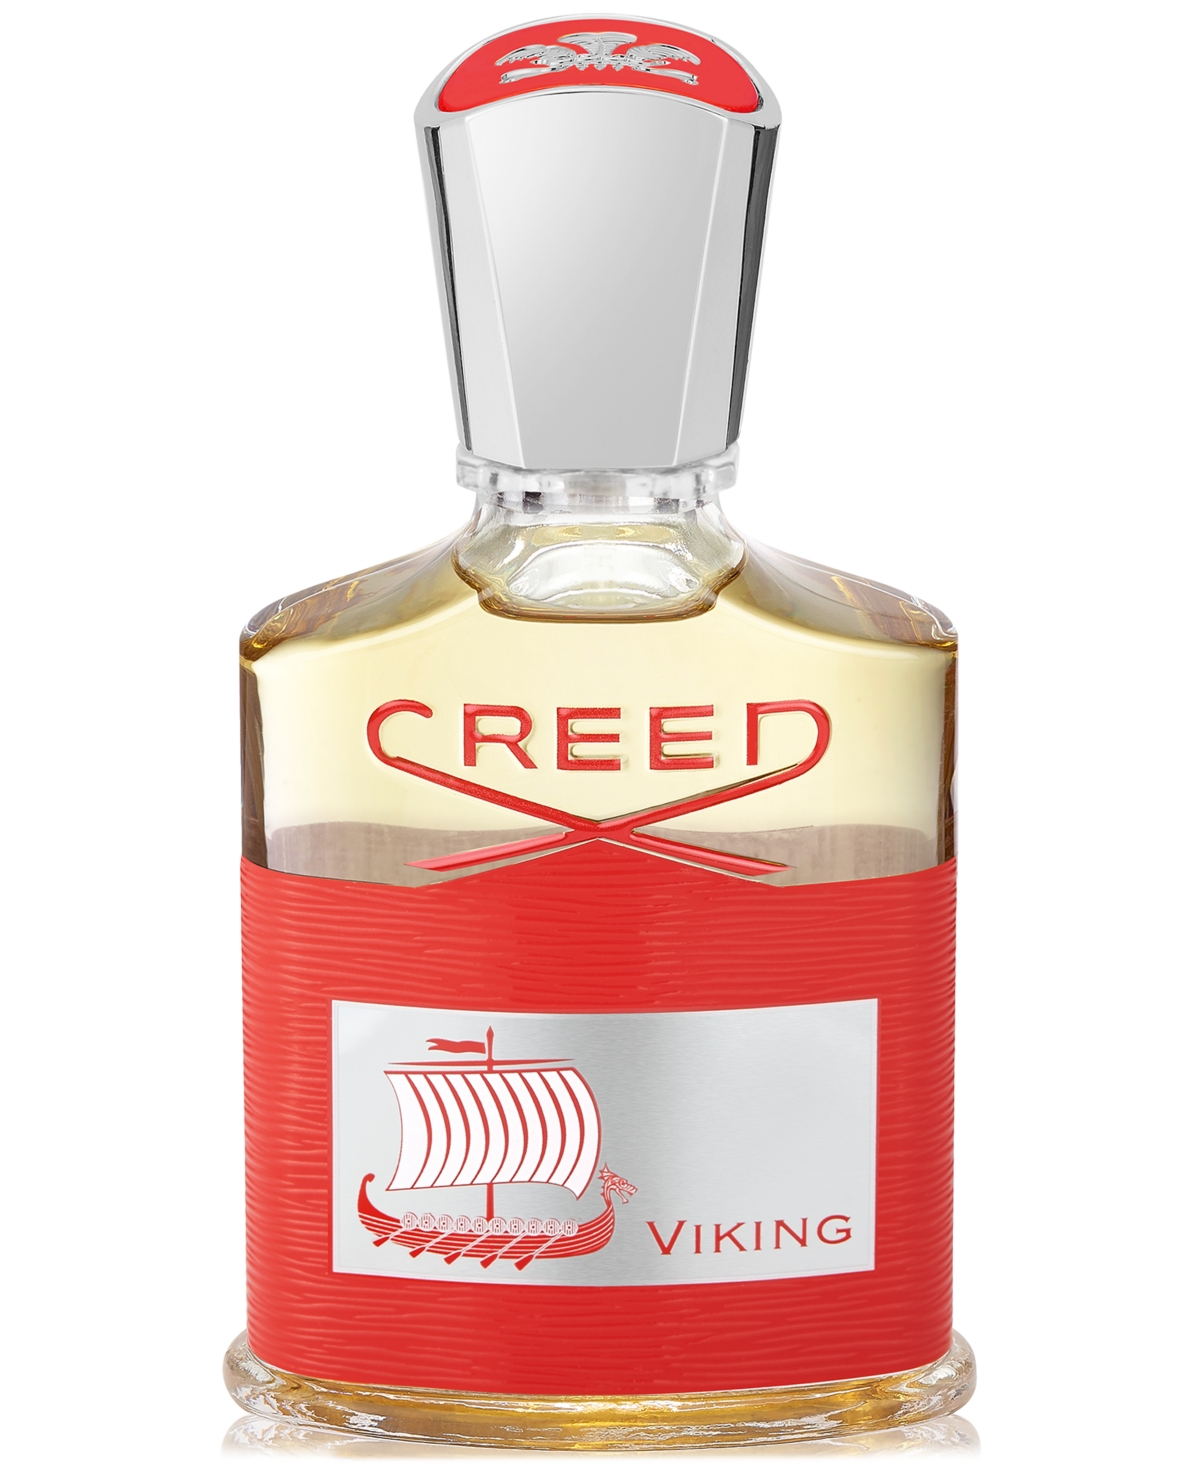 Creed Viking, 1.7 oz.